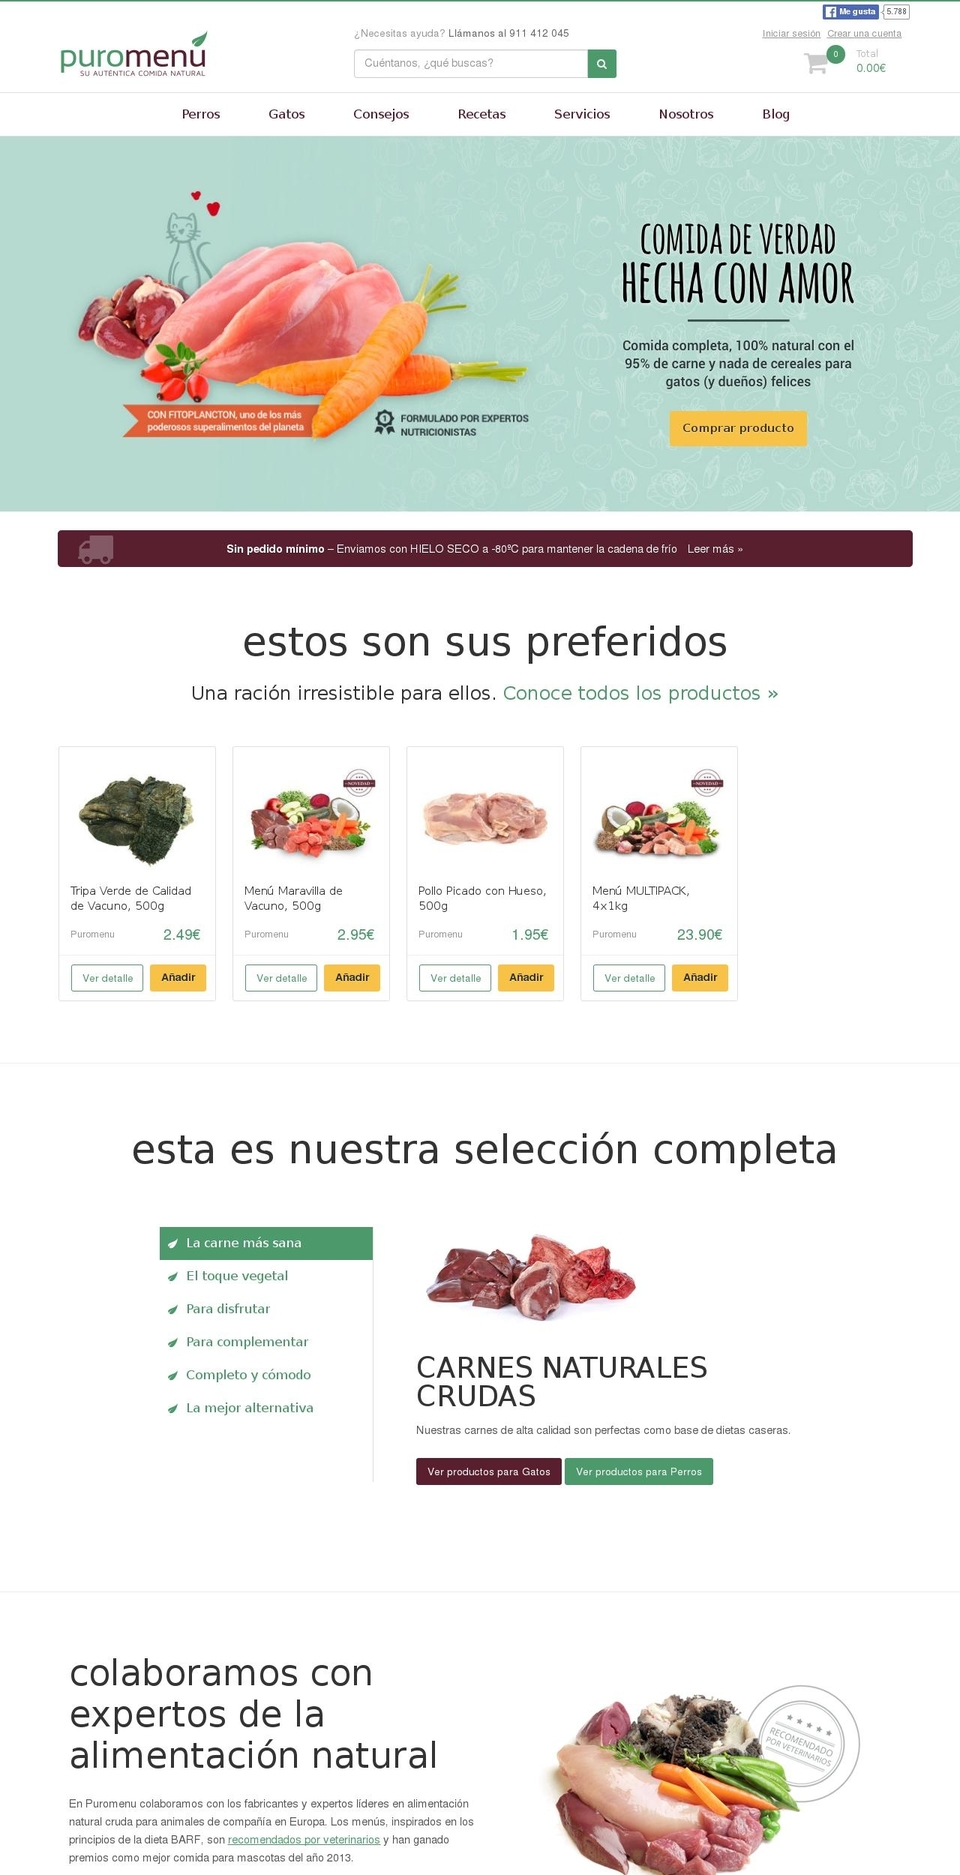 puromenu.es shopify website screenshot